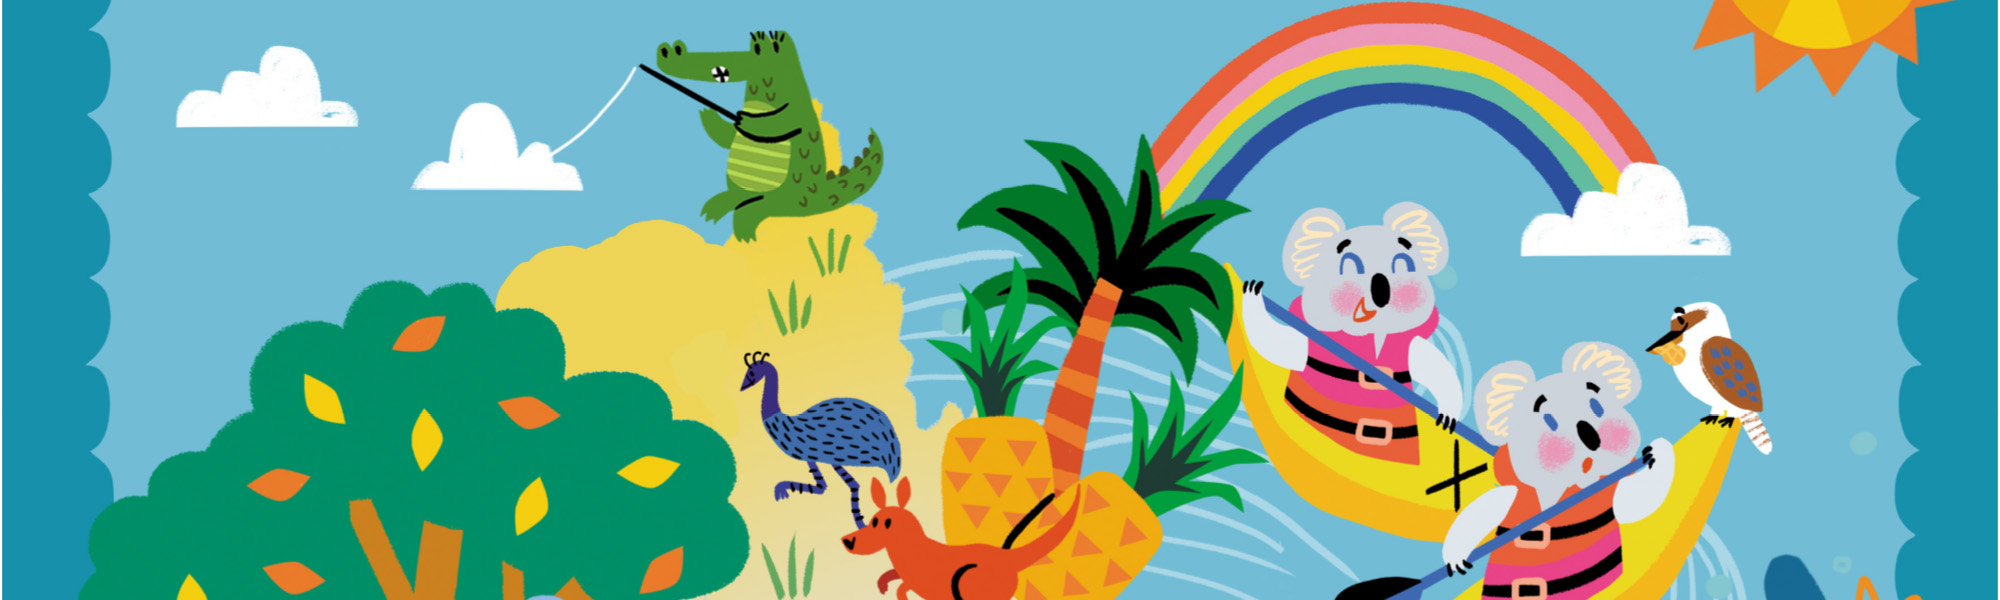 koala, kangaroo and emu cartoon with rainbow 